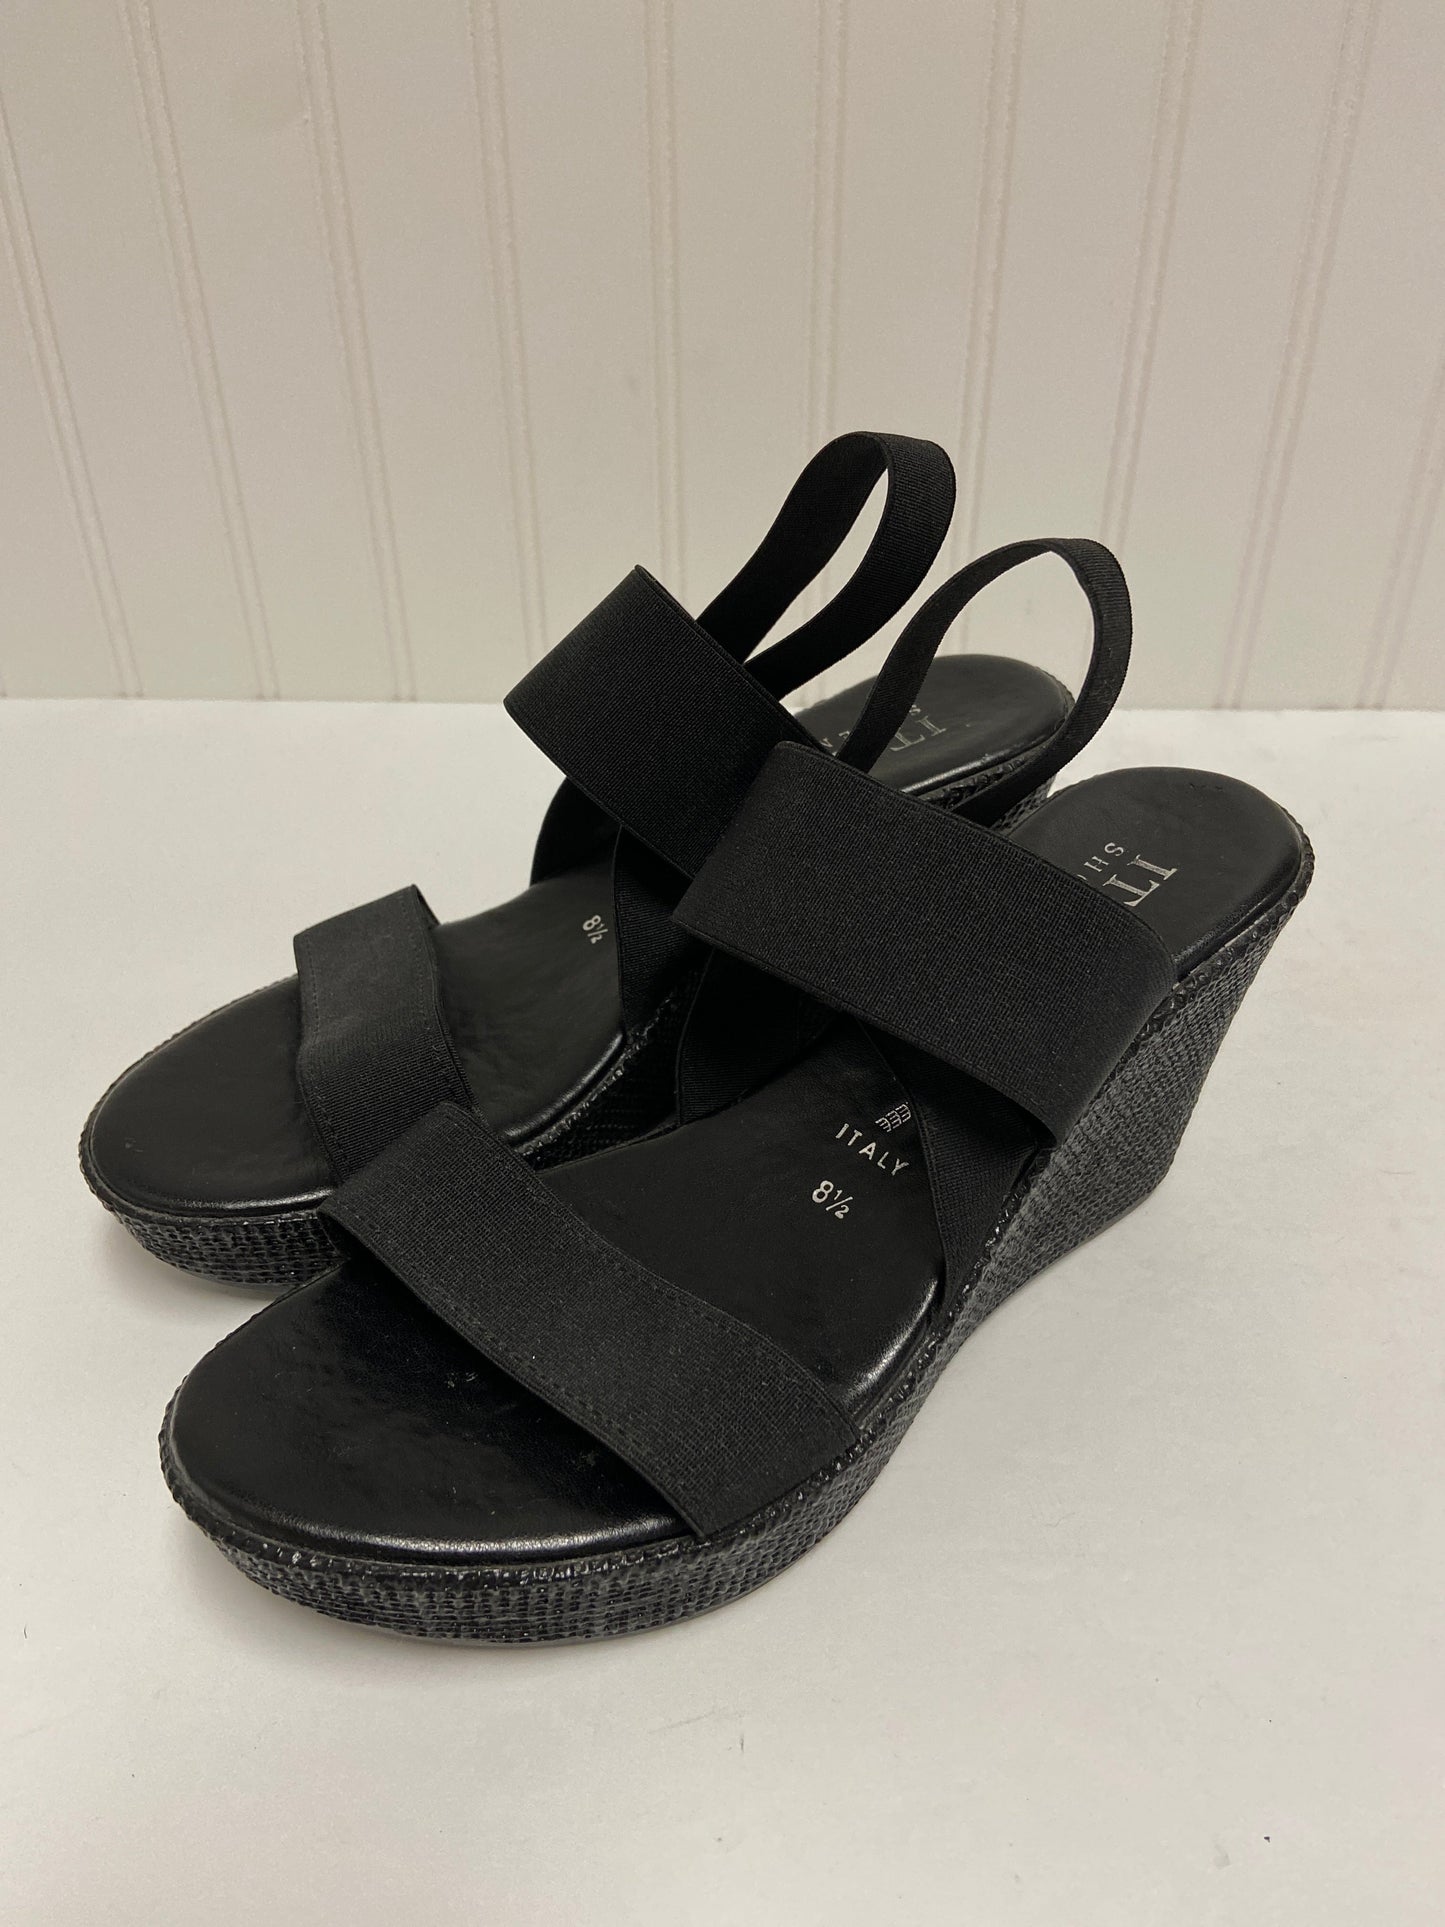 Black Sandals Heels Wedge Italian Shoemakers, Size 8.5